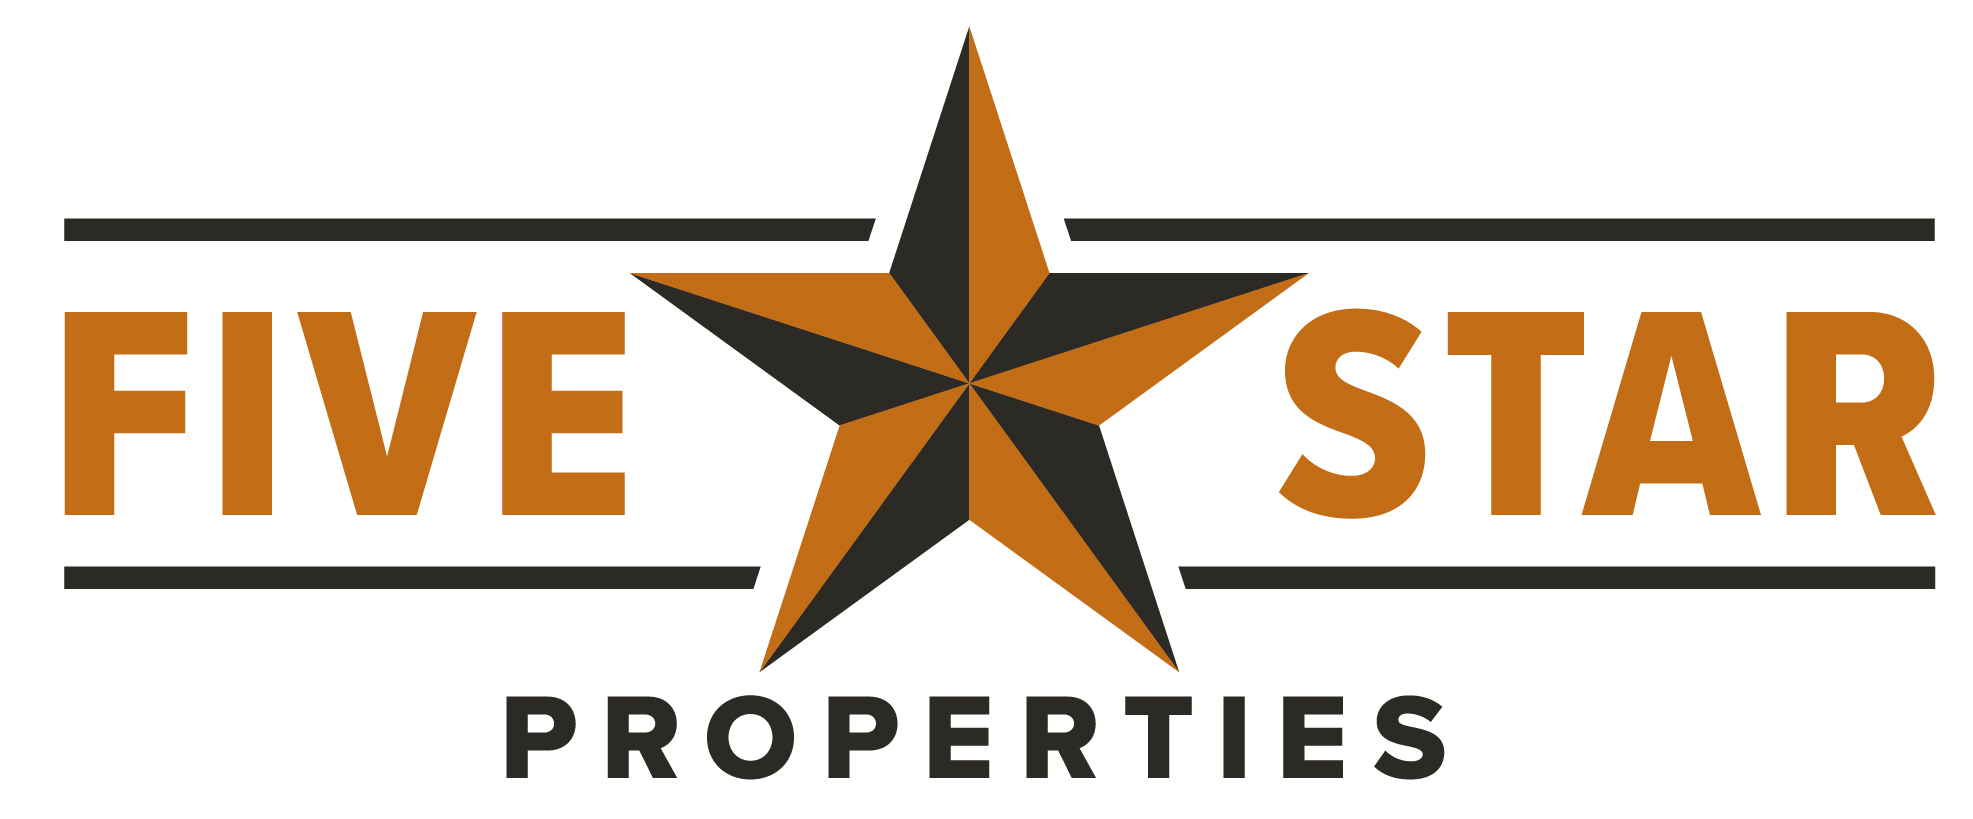 Five Star Properties Inc. company logo